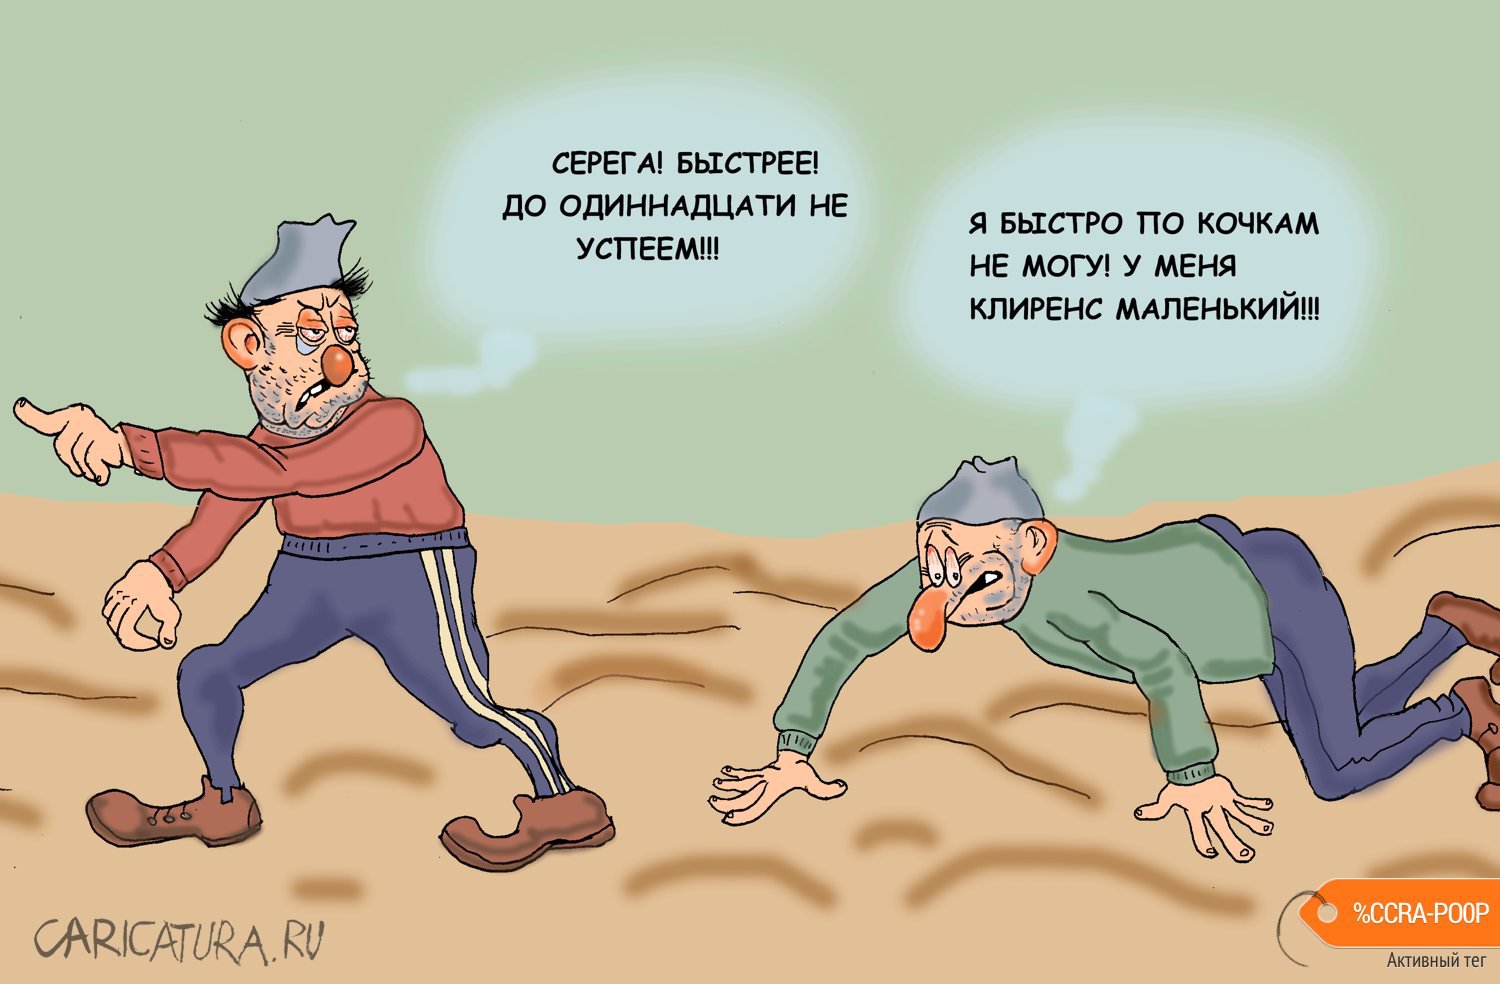 Карикатура "Клиренс", Булат Ирсаев